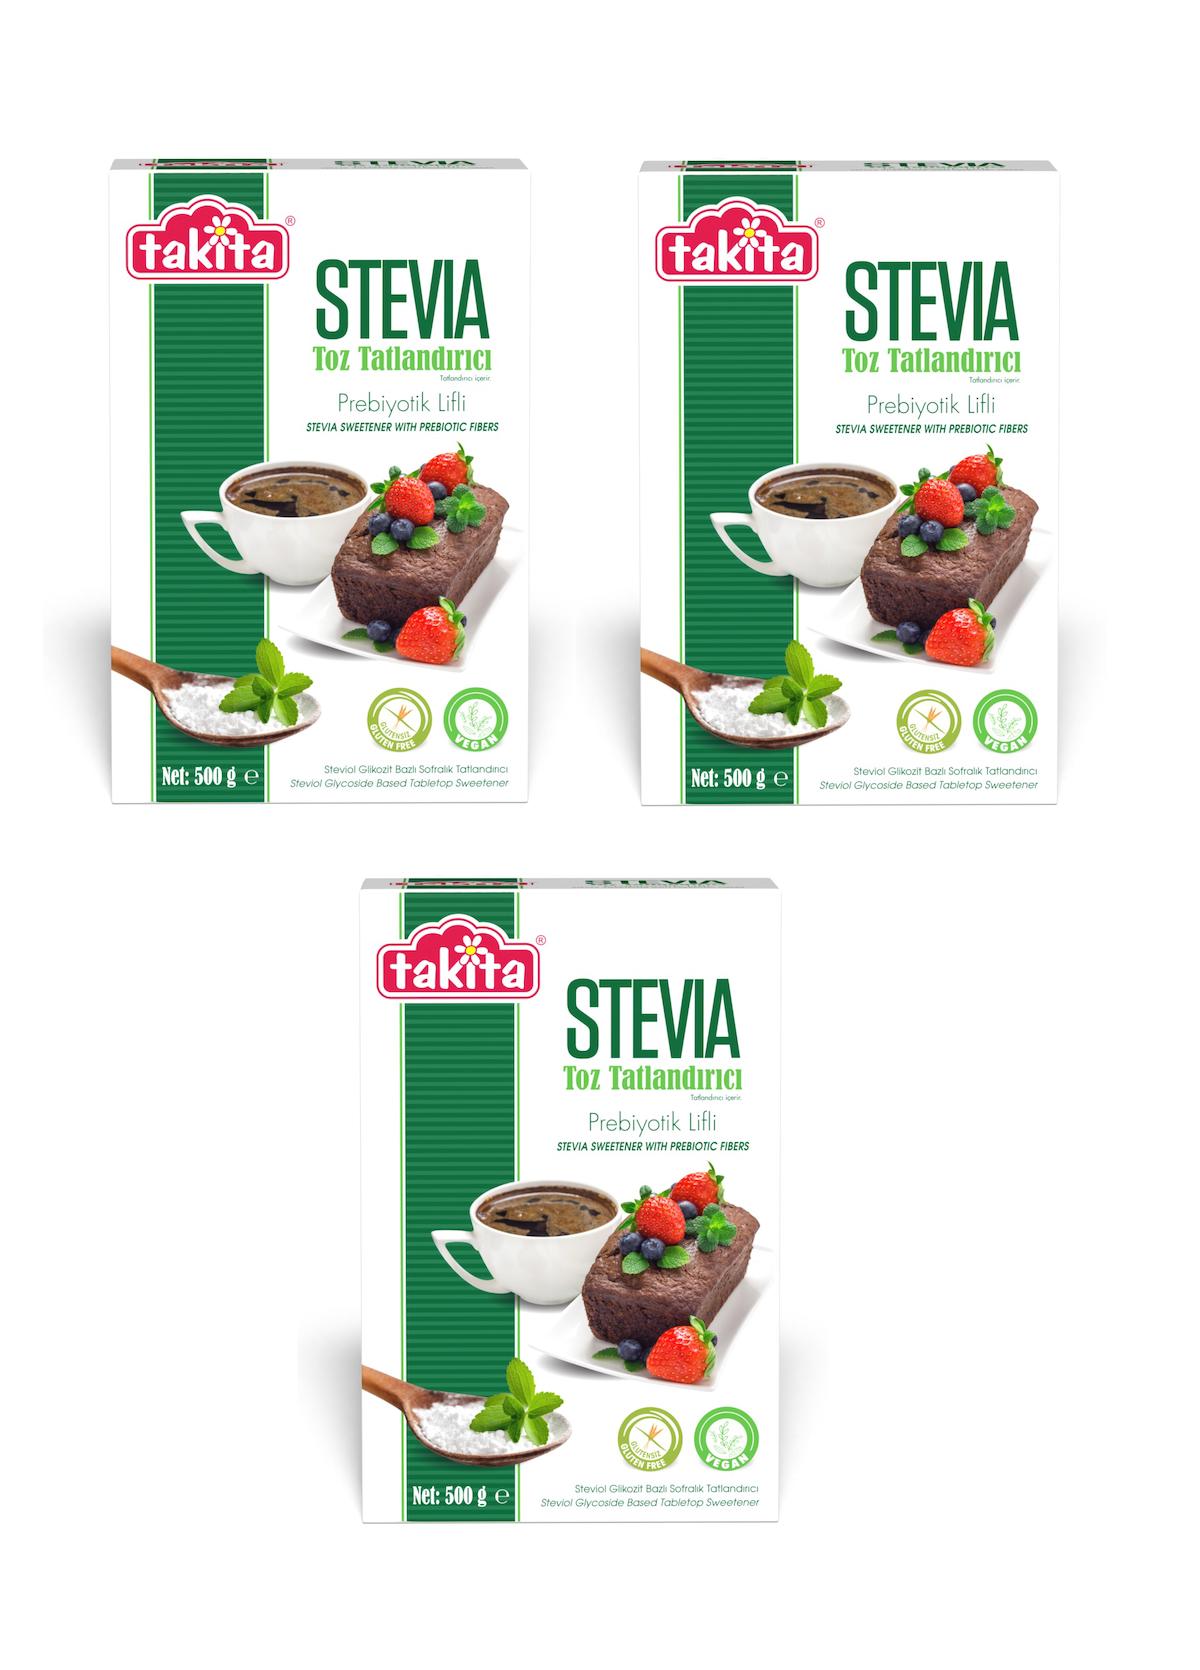 Takita Stevia Prebiyotik Lifli Toz Tatlandırıcı 2x 500 gr